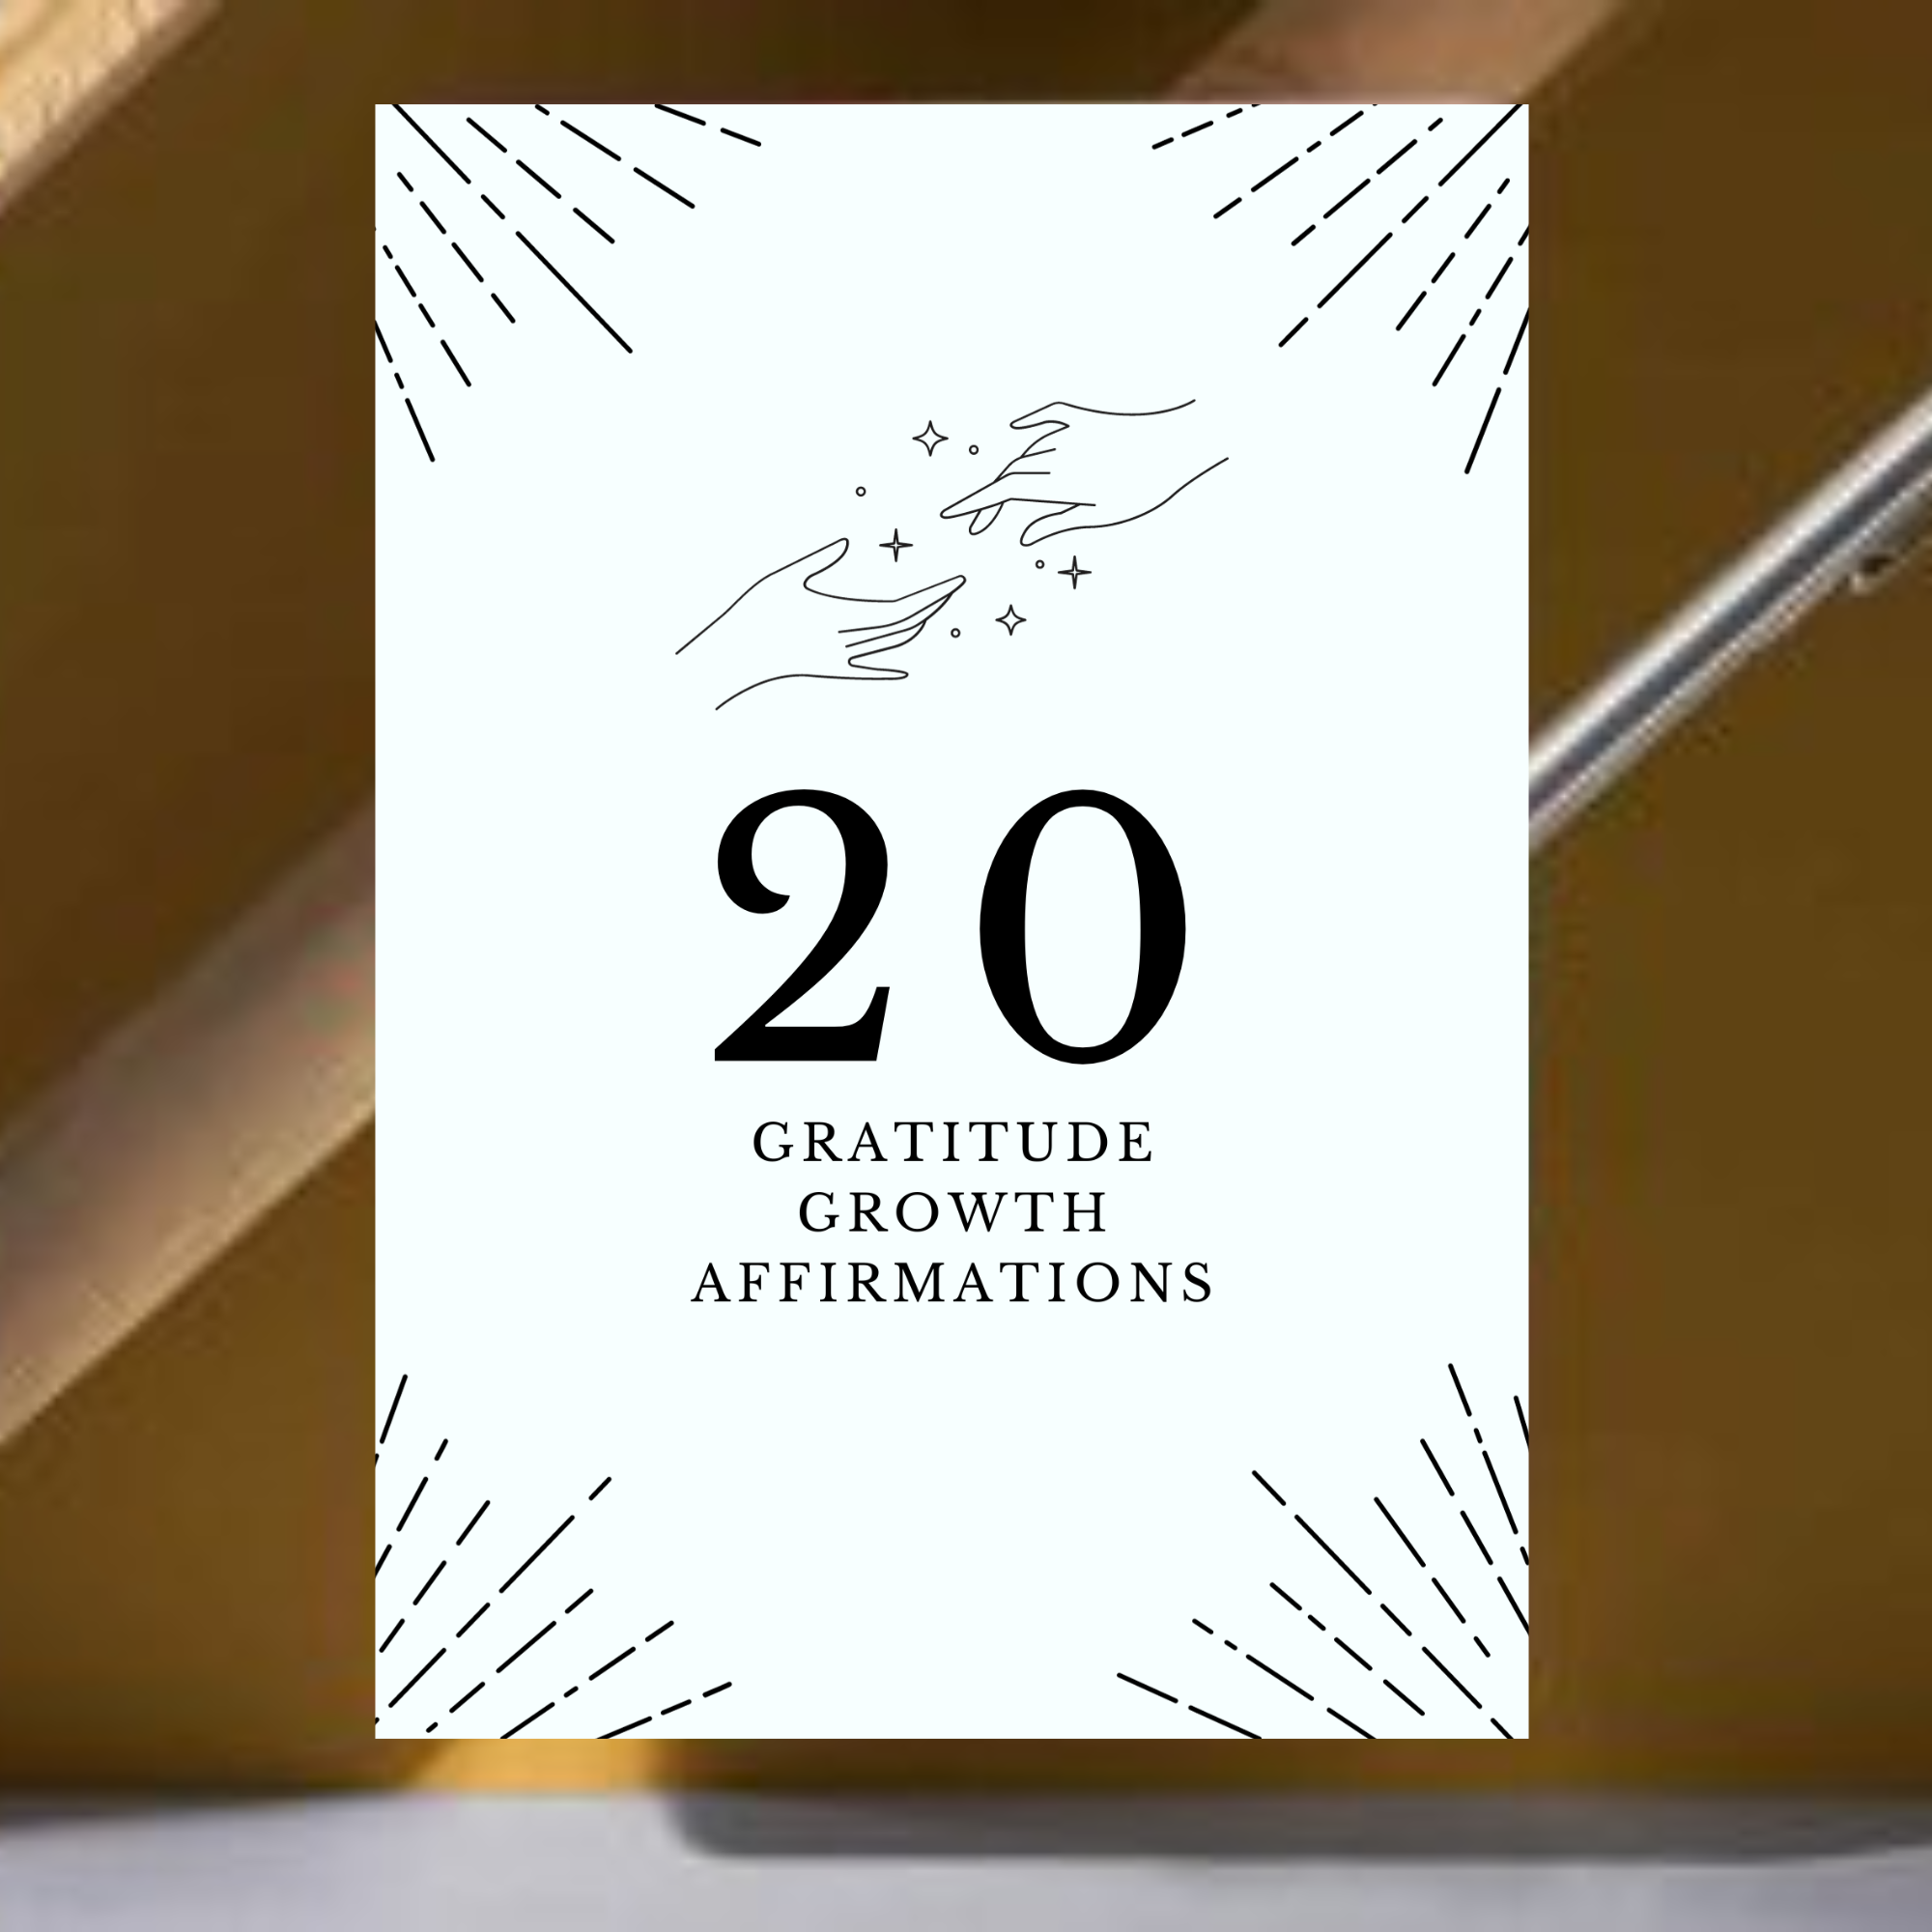 20 Gratitude Growth Affirmation Cards (5x7) - Digital Download, Printable & Canva Editable